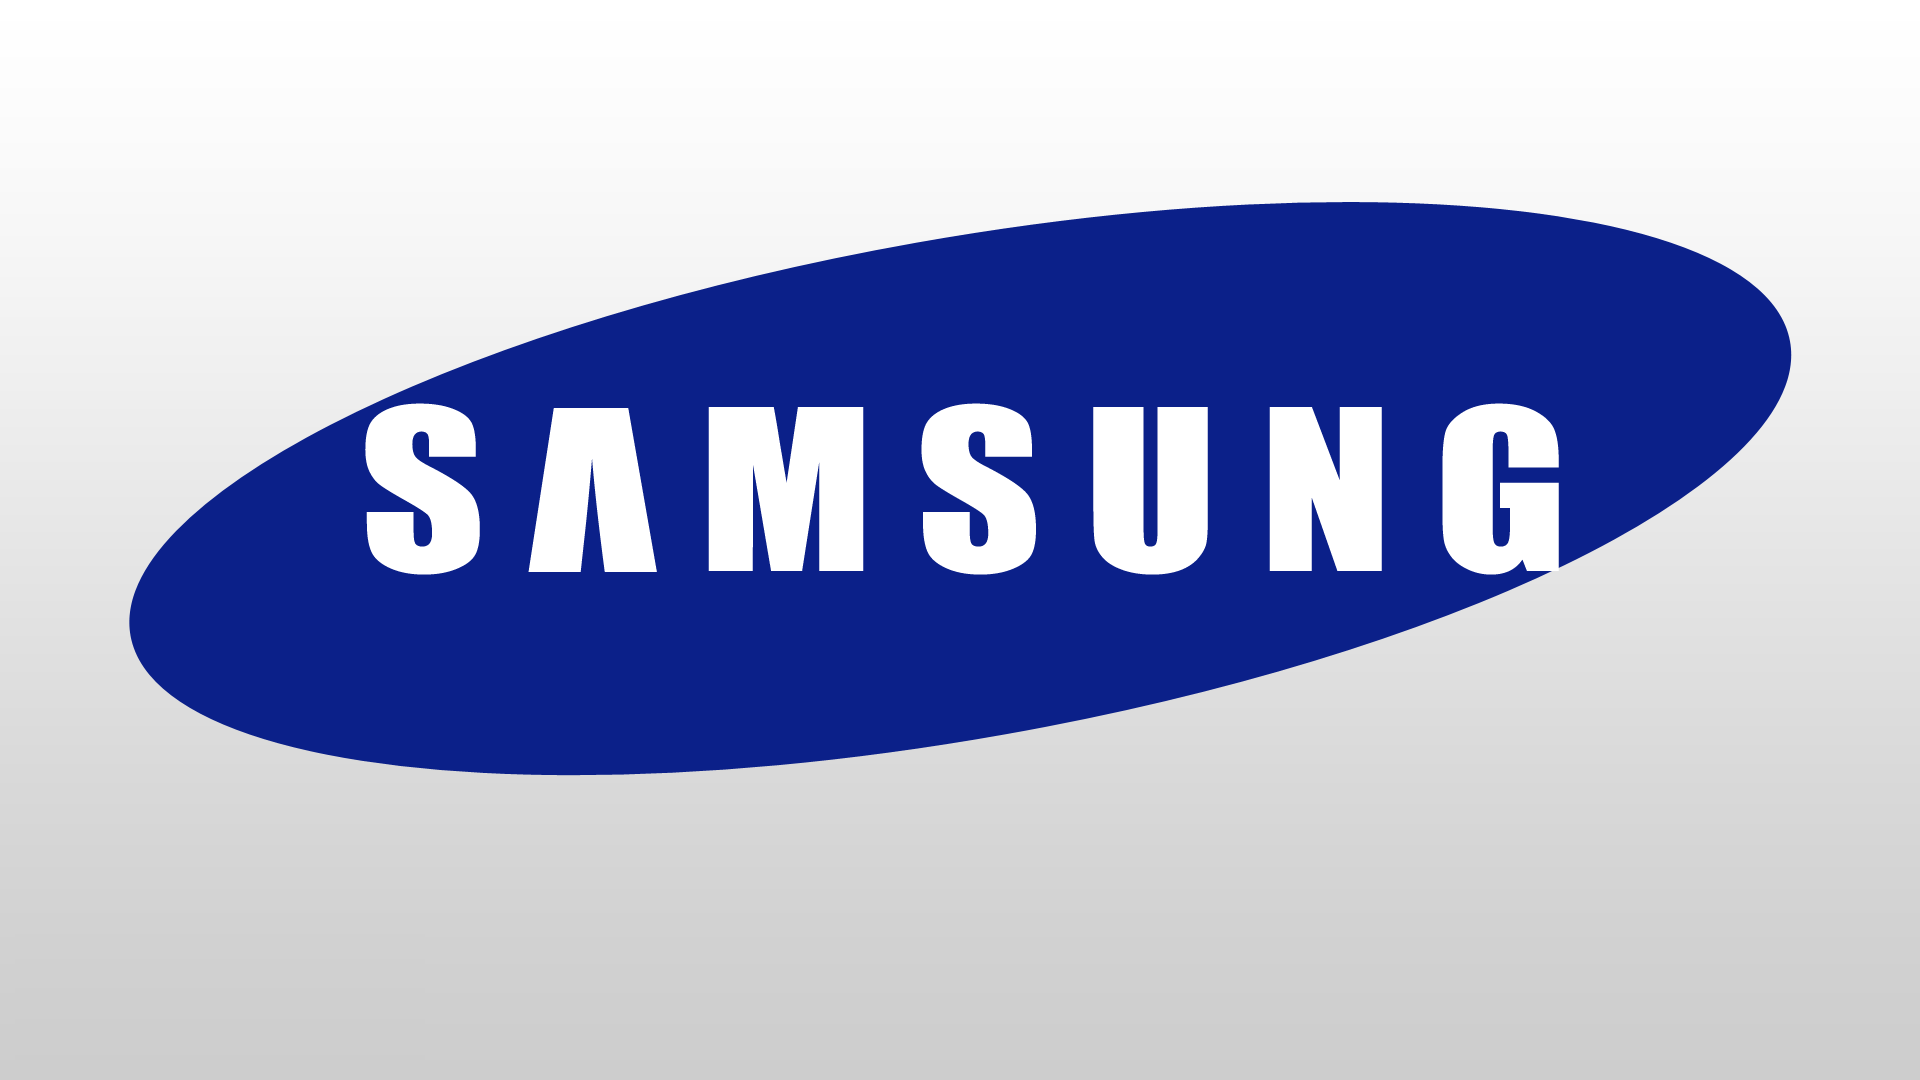 Samsunglogo.png - Samsung, Transparent background PNG HD thumbnail